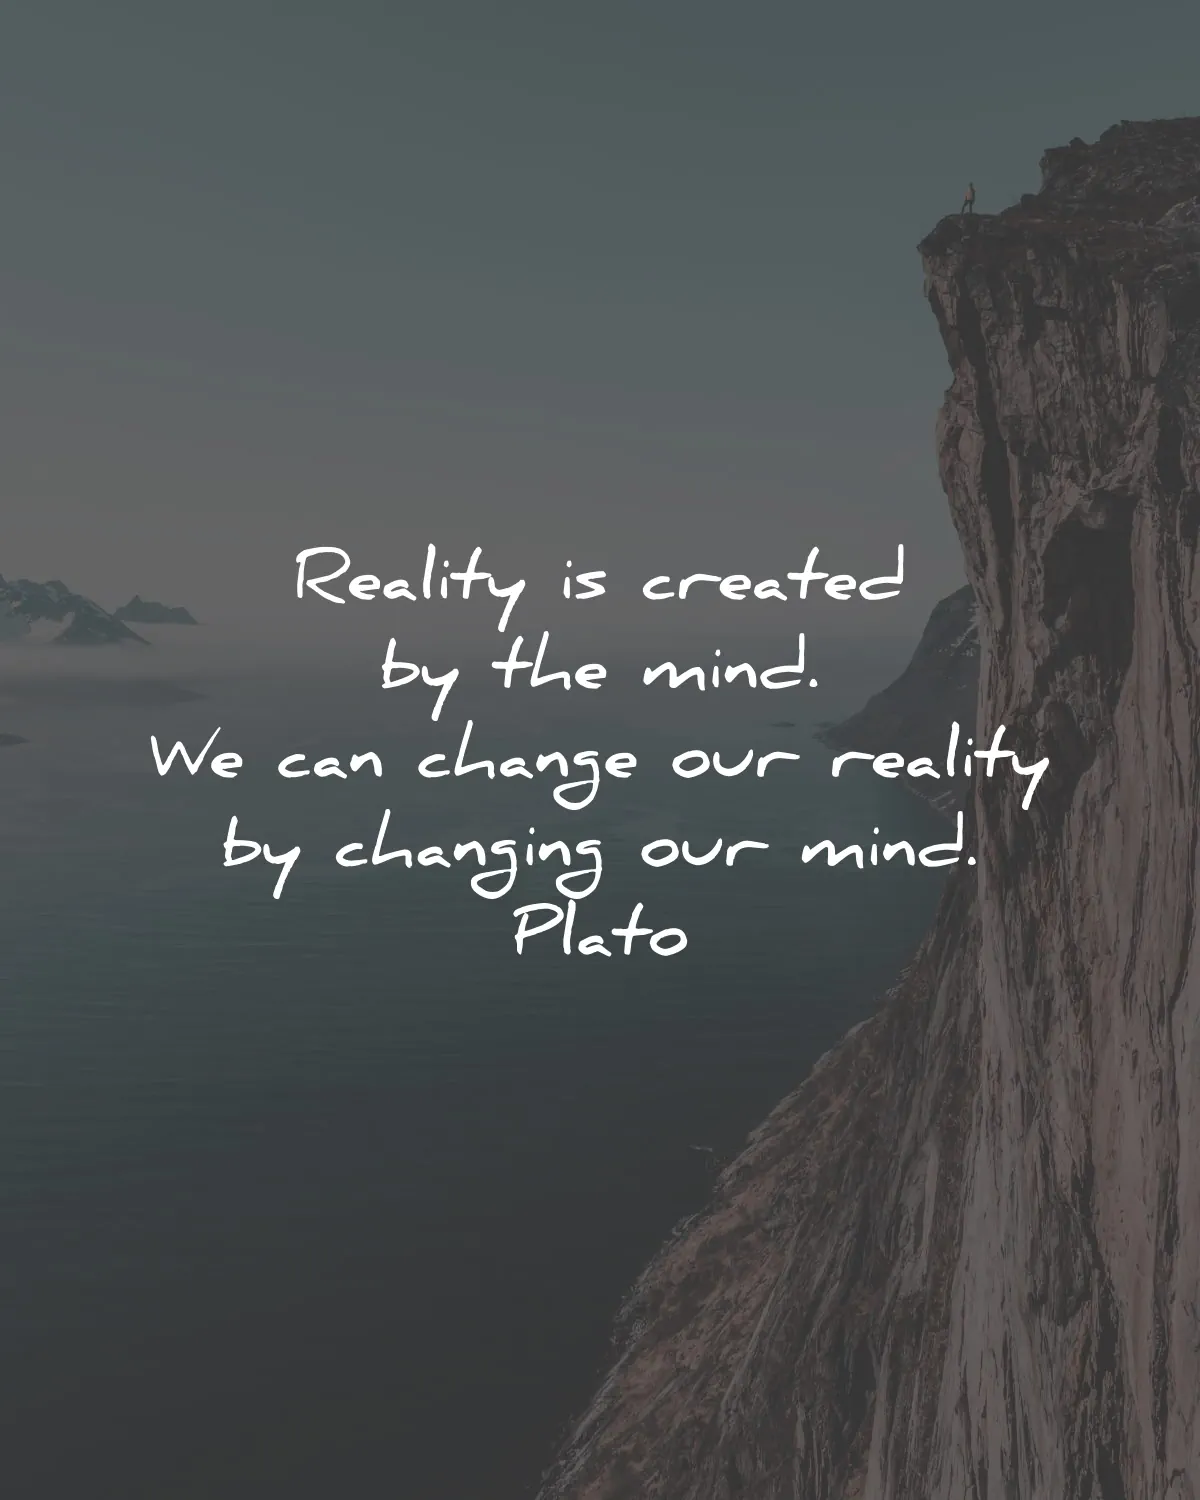 plato quotes reality created mind change wisdom